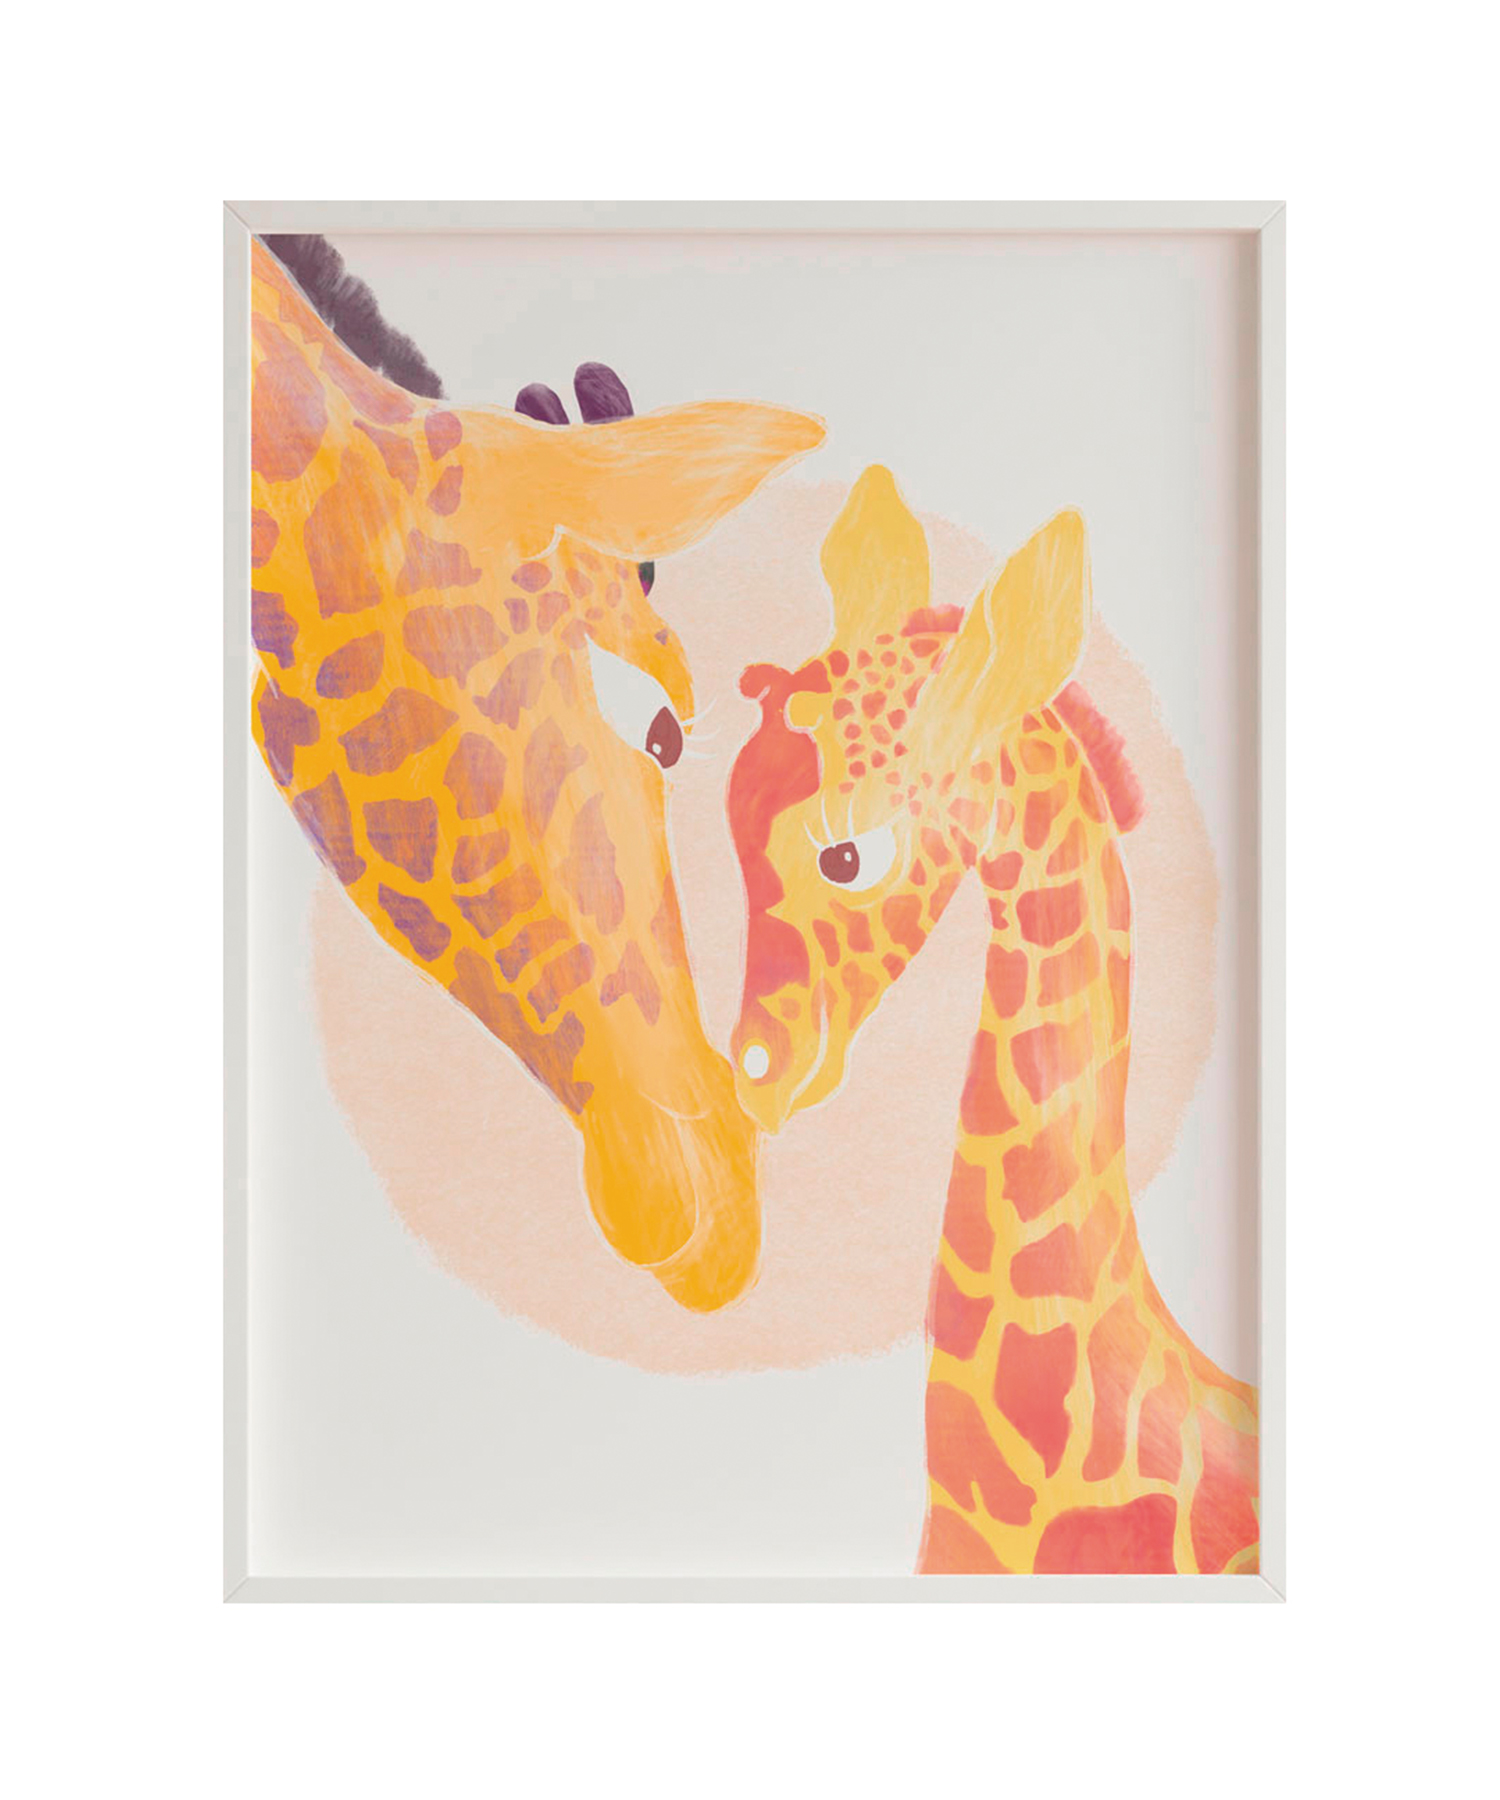 Impression de girafe fantasy encadrée en bois blanc 43X33 cm